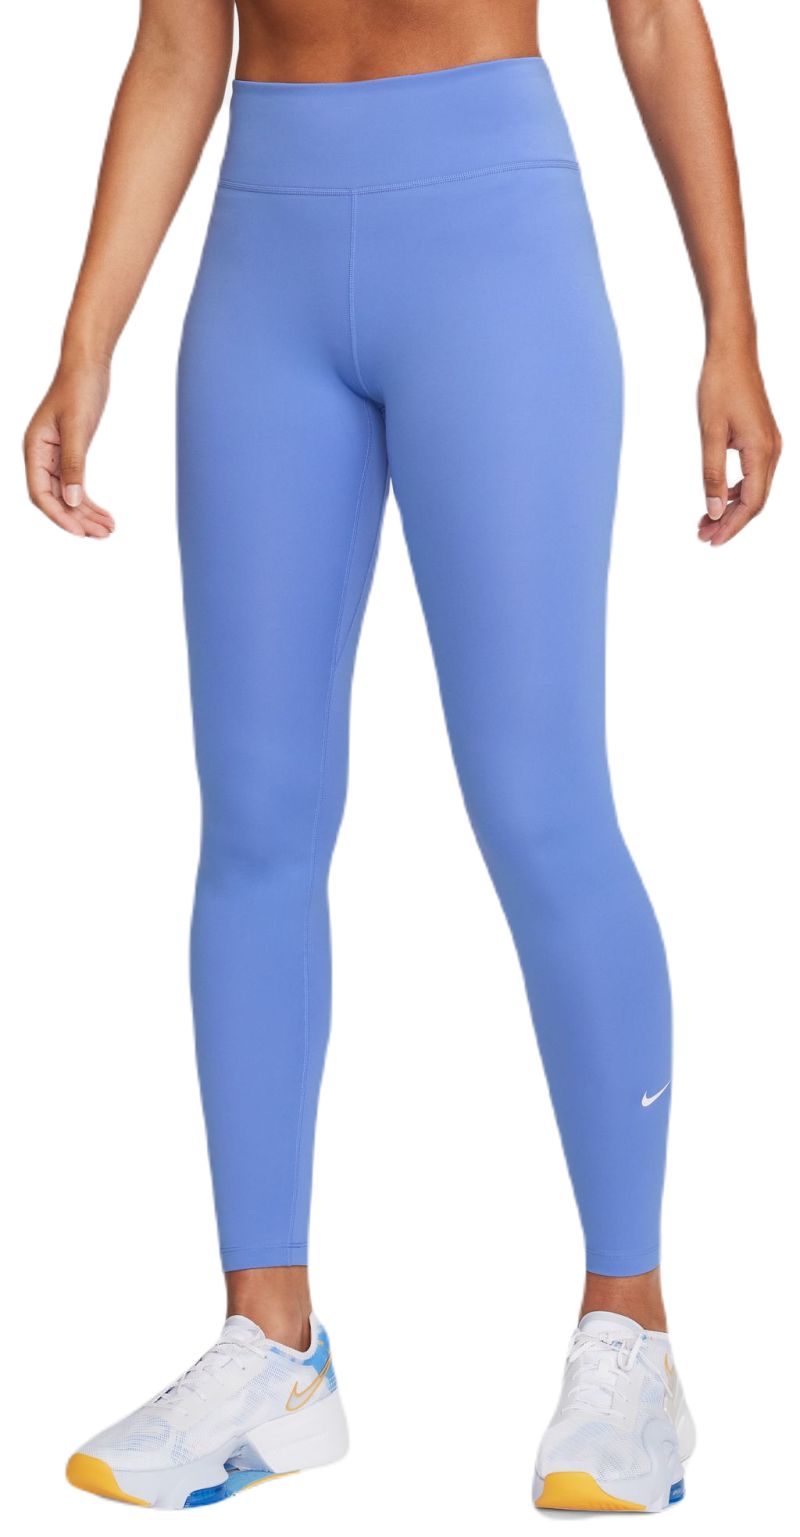 Women's leggings Nike One Dri-Fit Mid-Rise Tight - polar/white